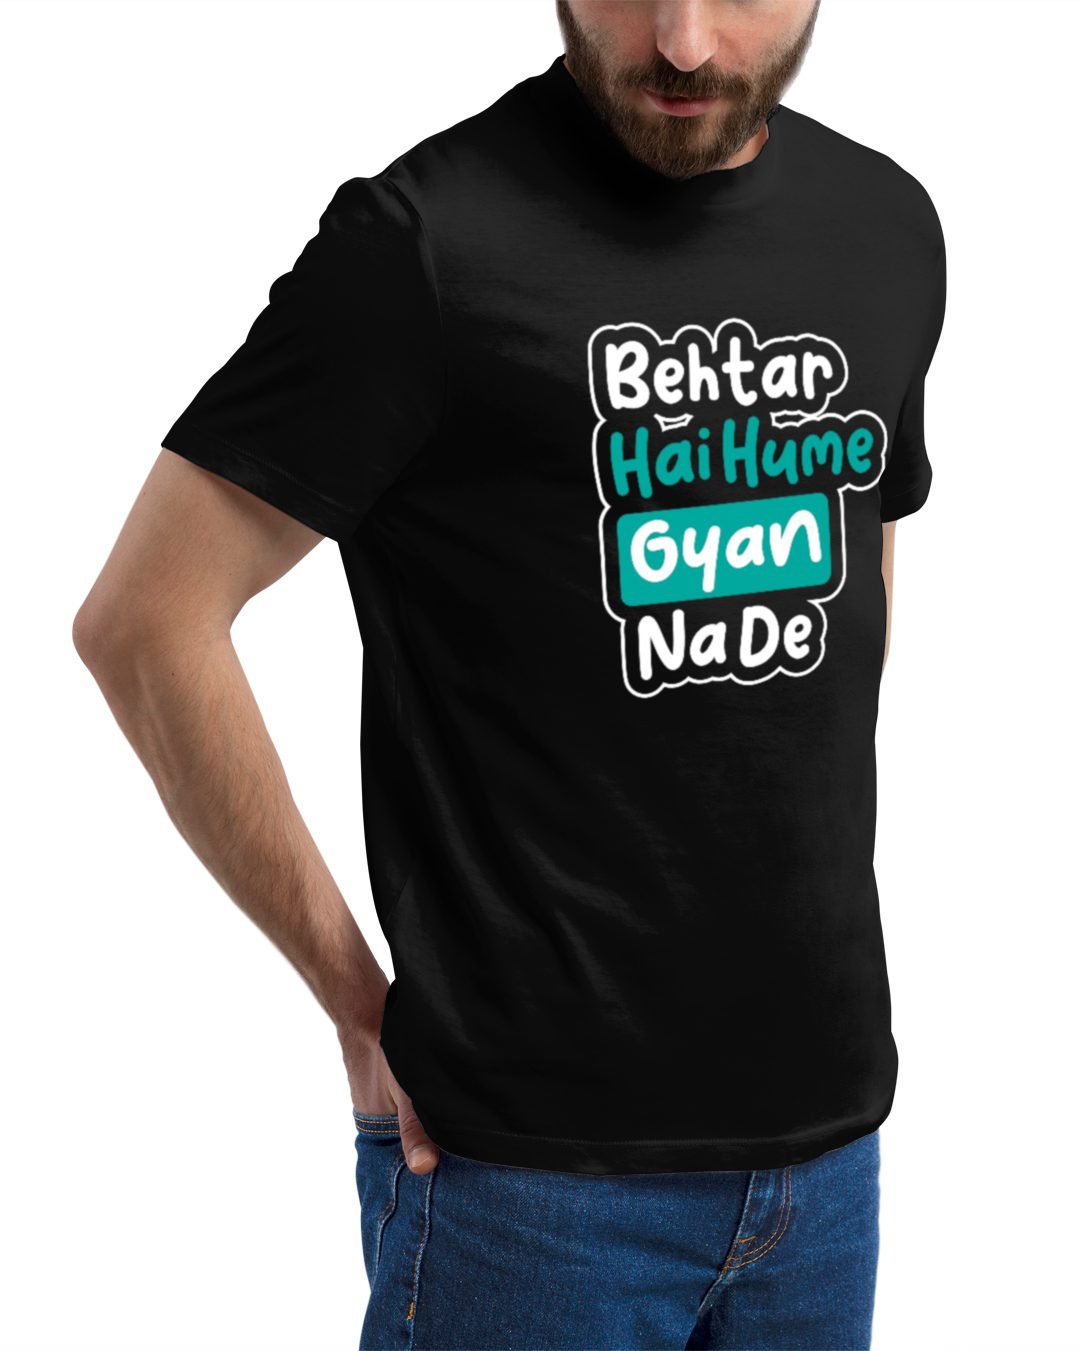 Behtar Hai Hume Gyan Na De Printed T-Shirt